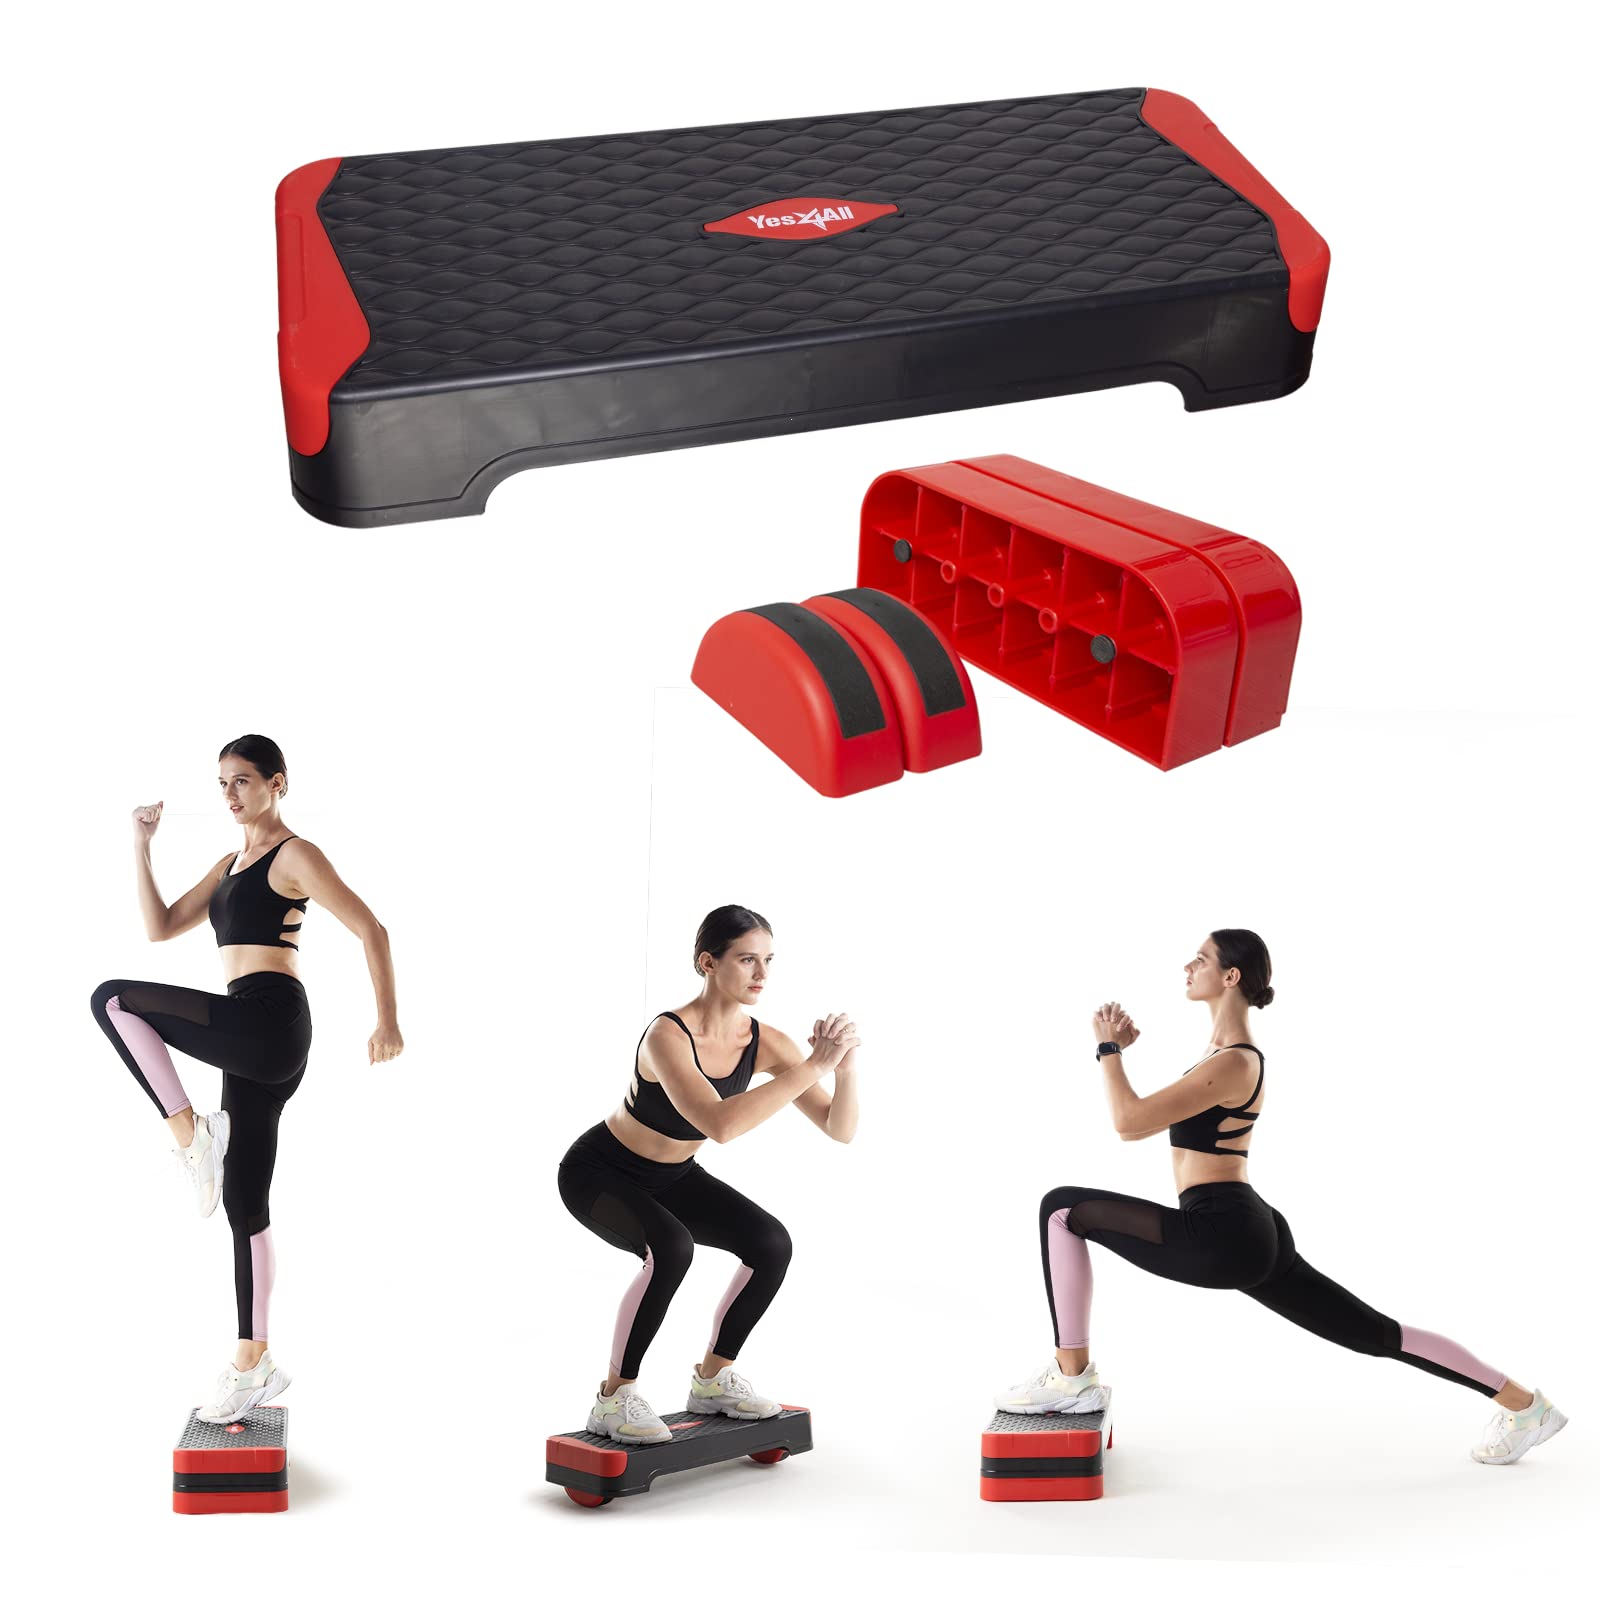 Yes4All Multifunctional Aerobic Stepper, Extra Half Round Legs, 4 6 Adjustable Step Aerobics Platform for Workout, Step & Balanc